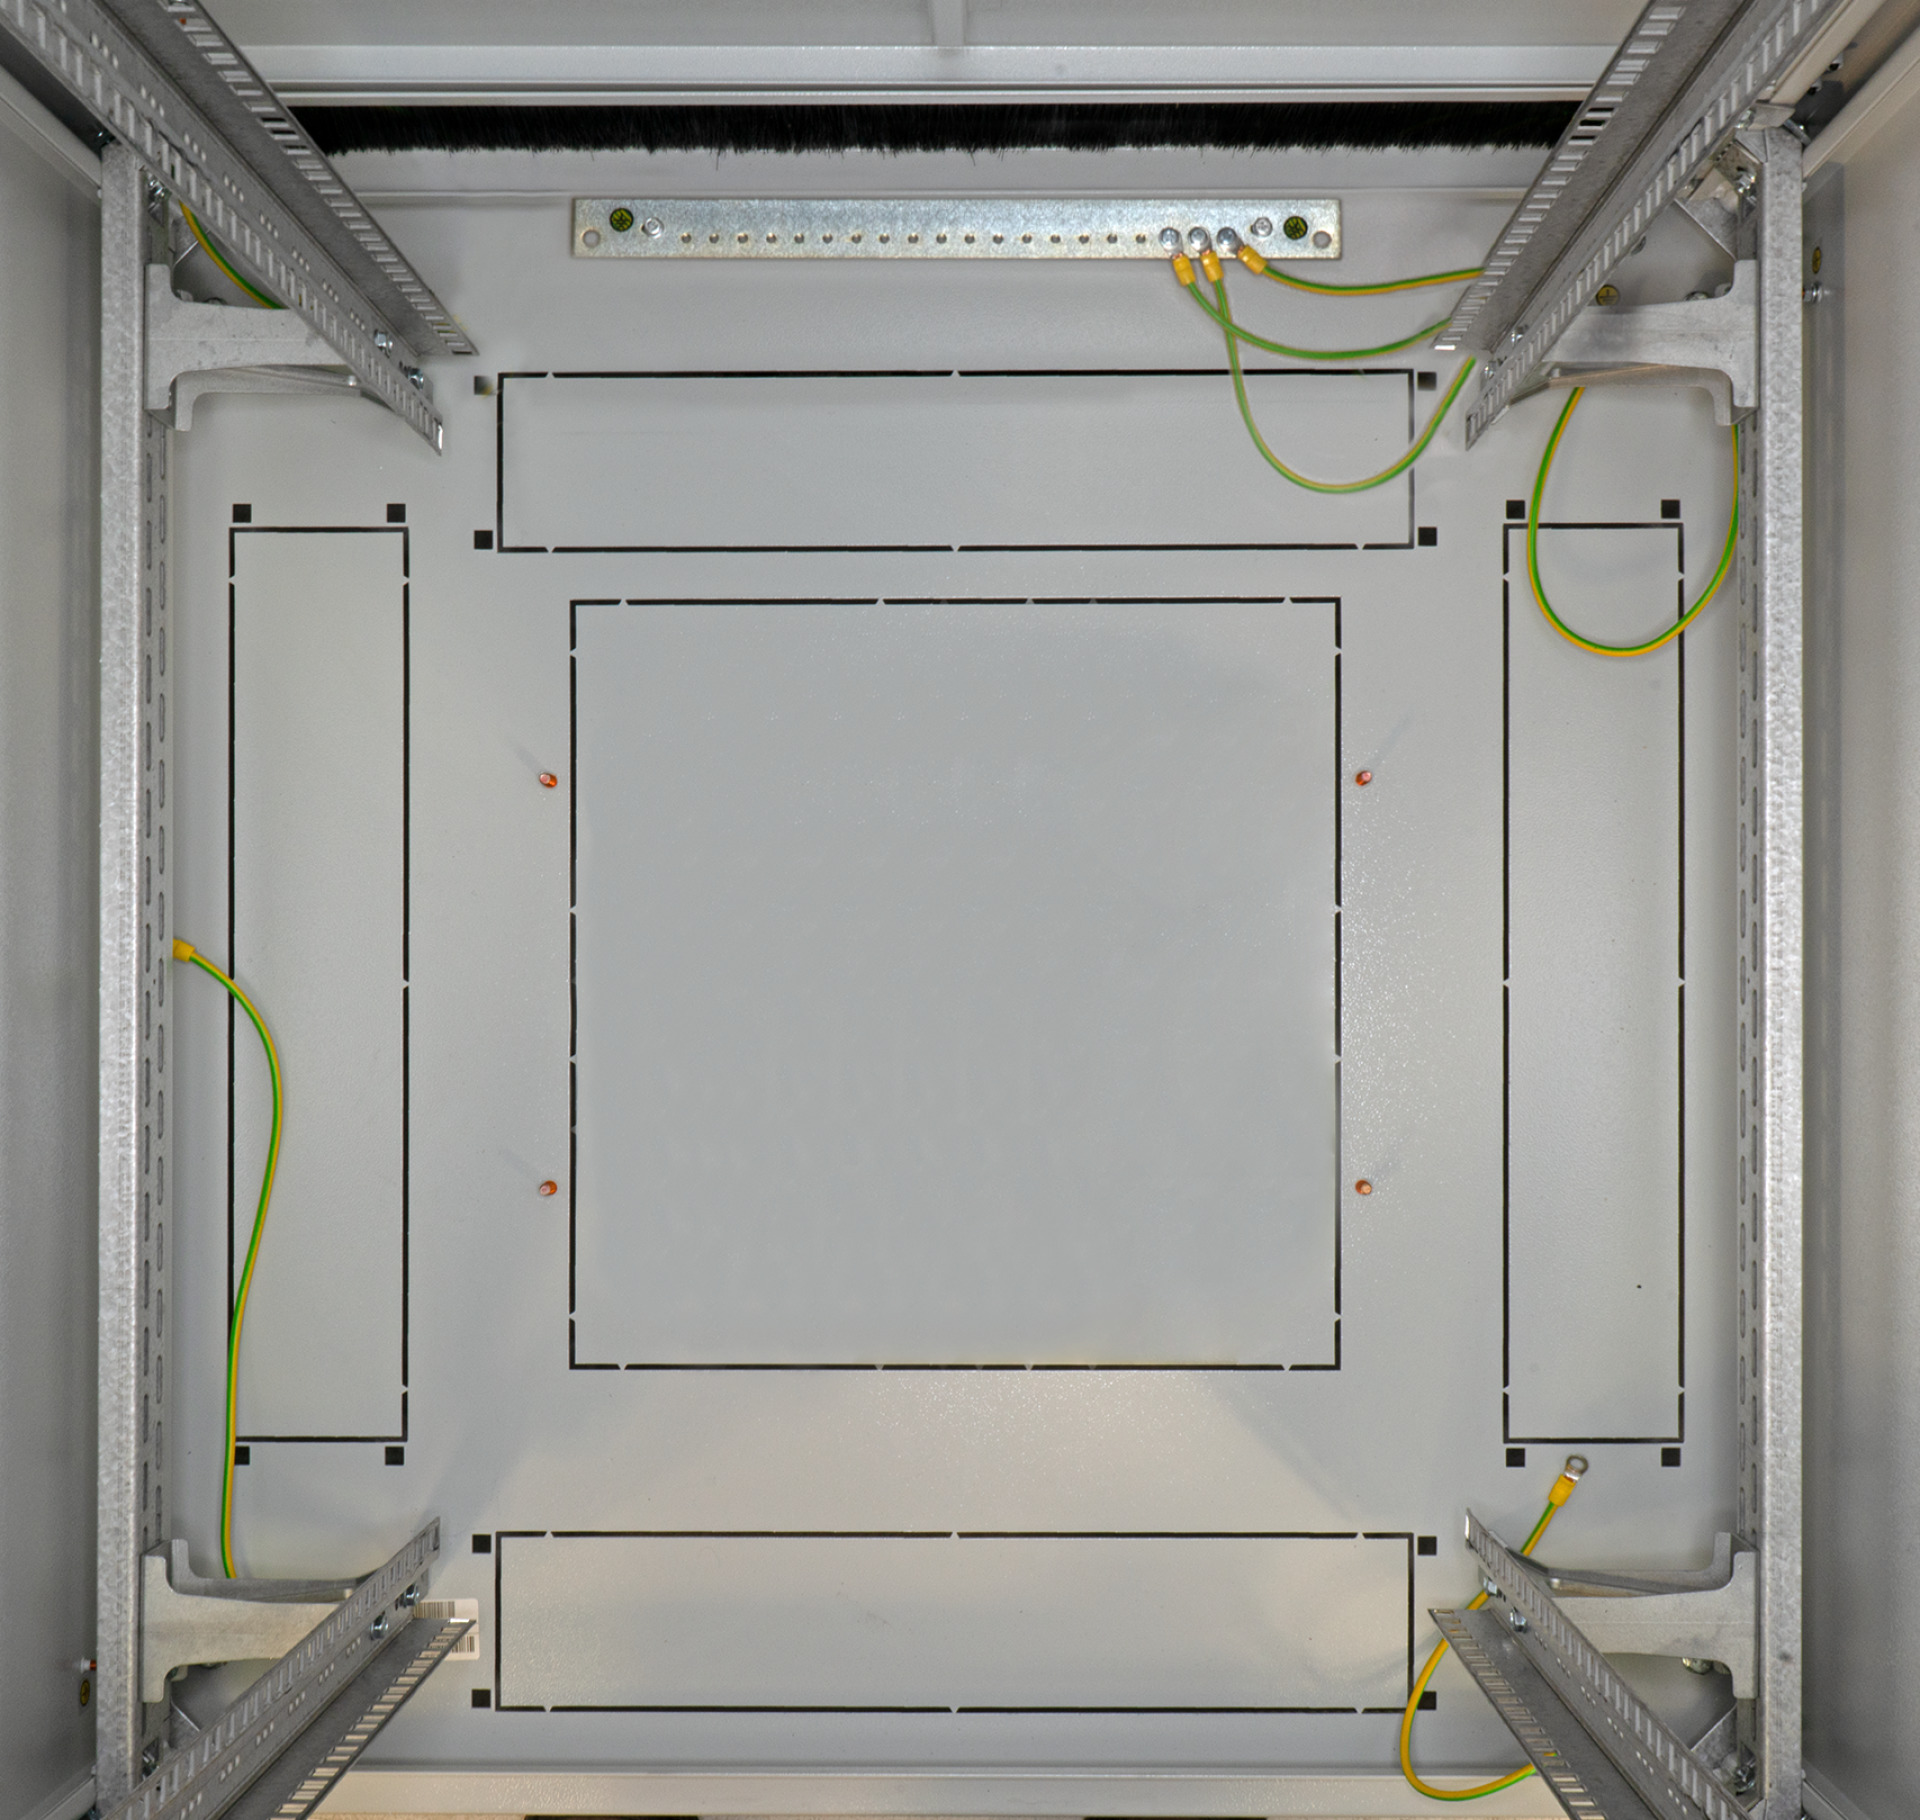 19" Network Cabinet PRO 47U, 600x800 mm, RAL7035